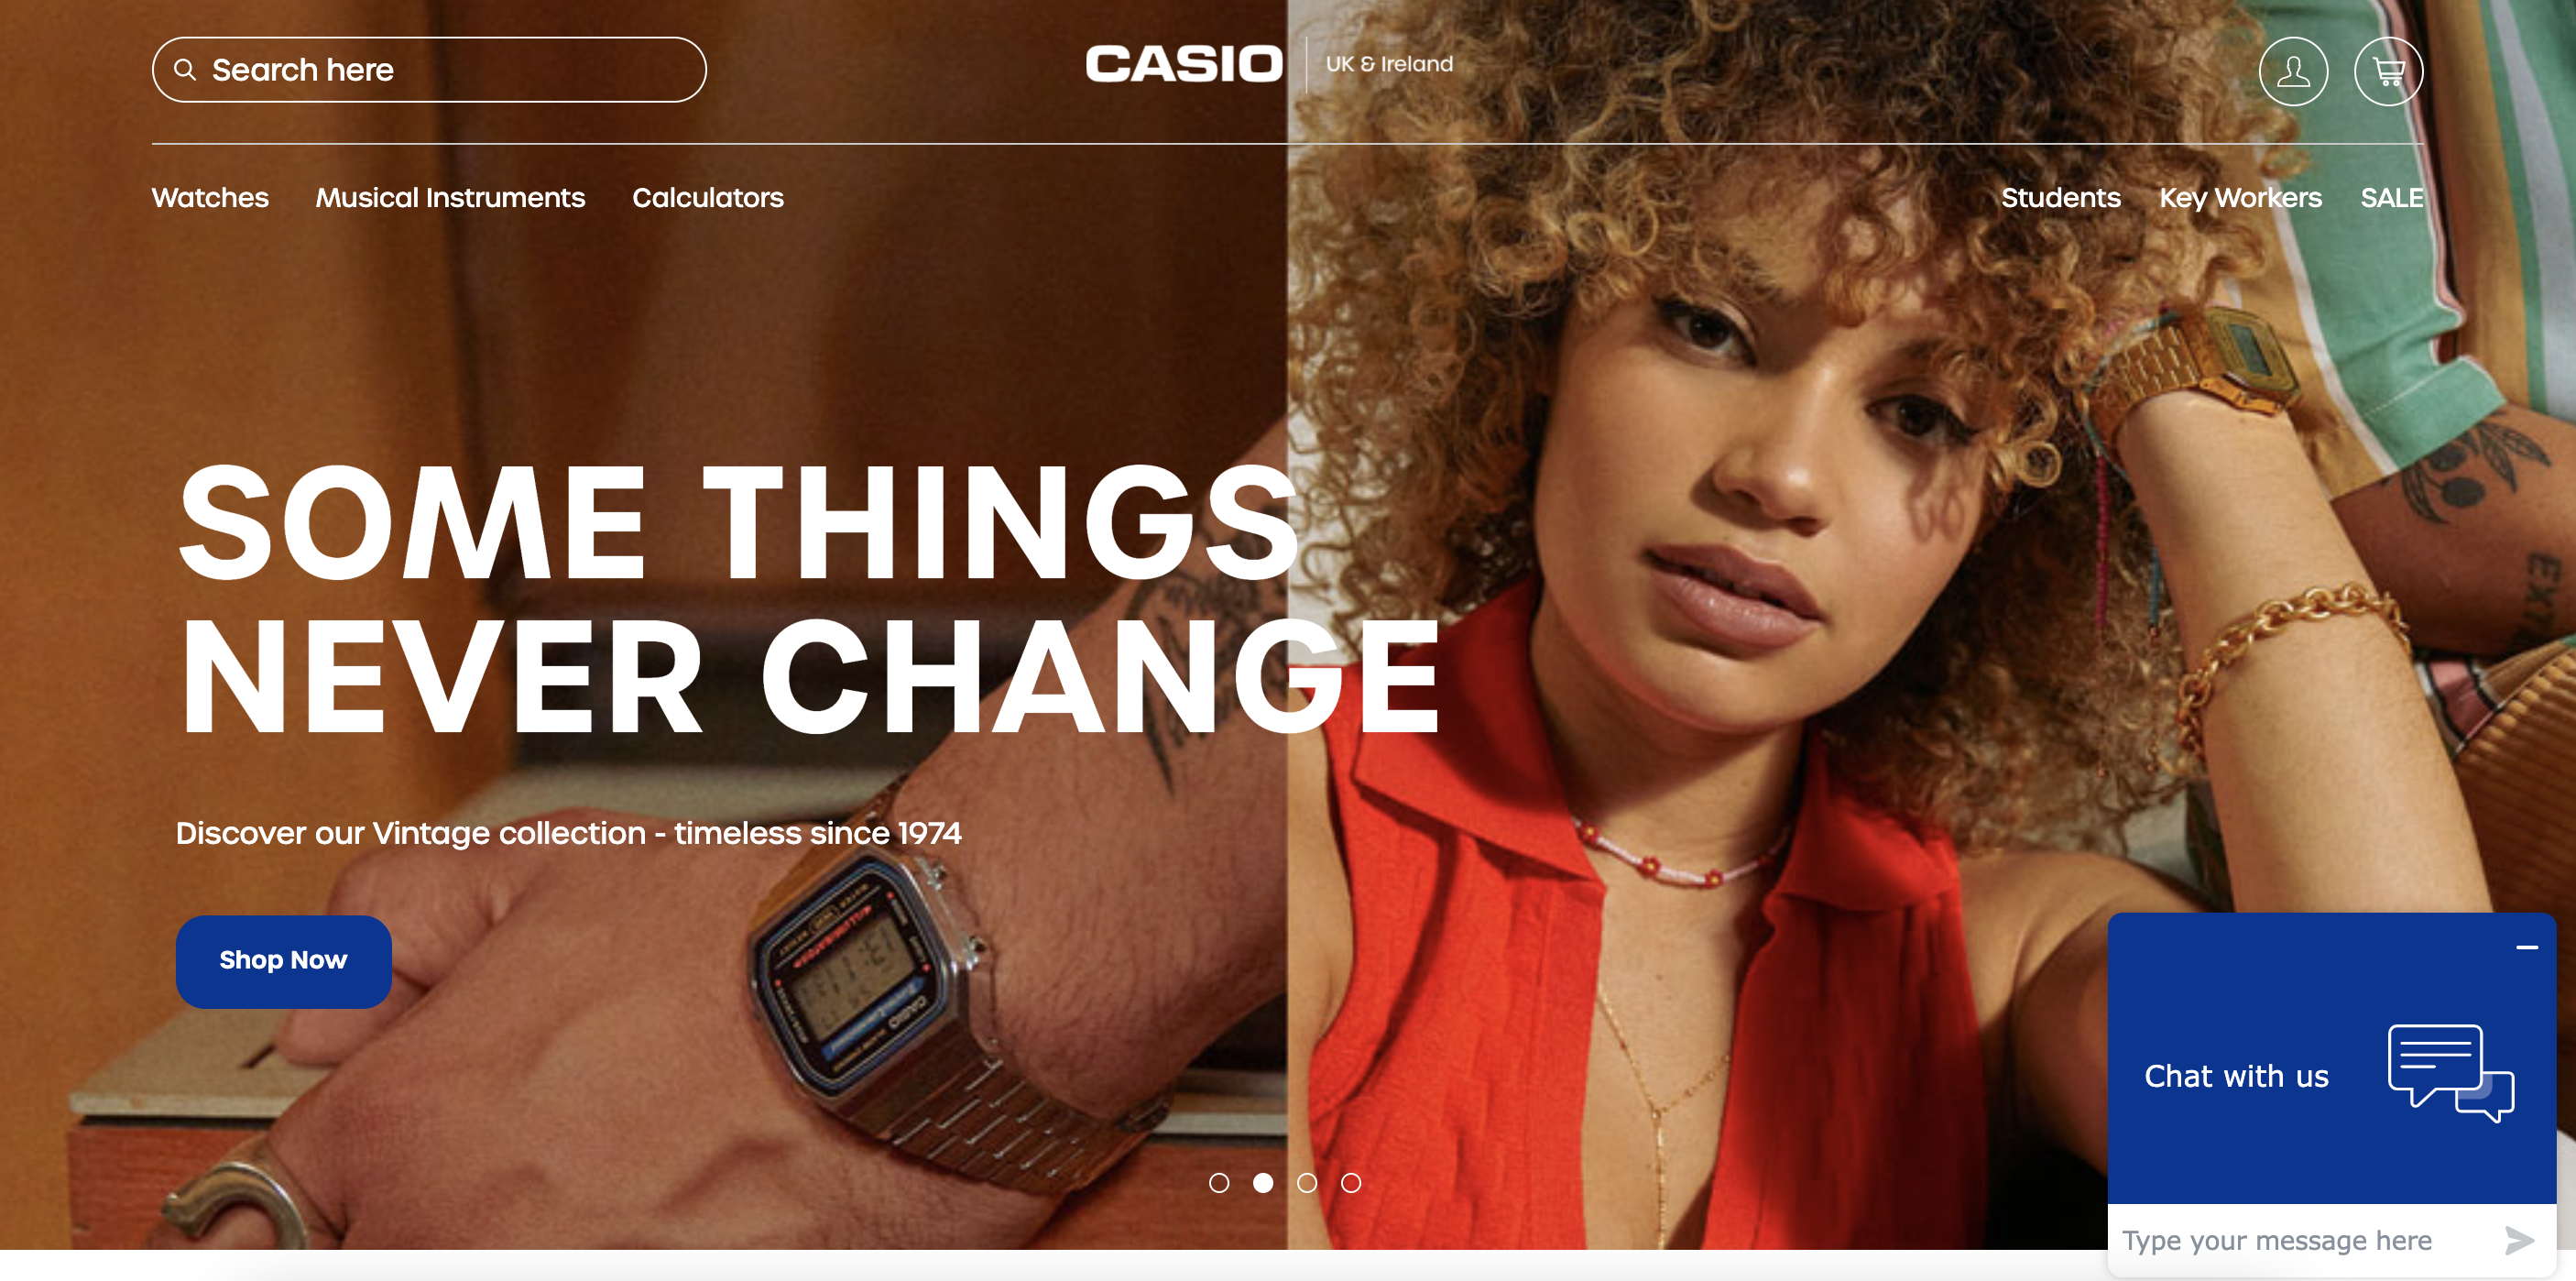 Homepage do site da Casio UK&I